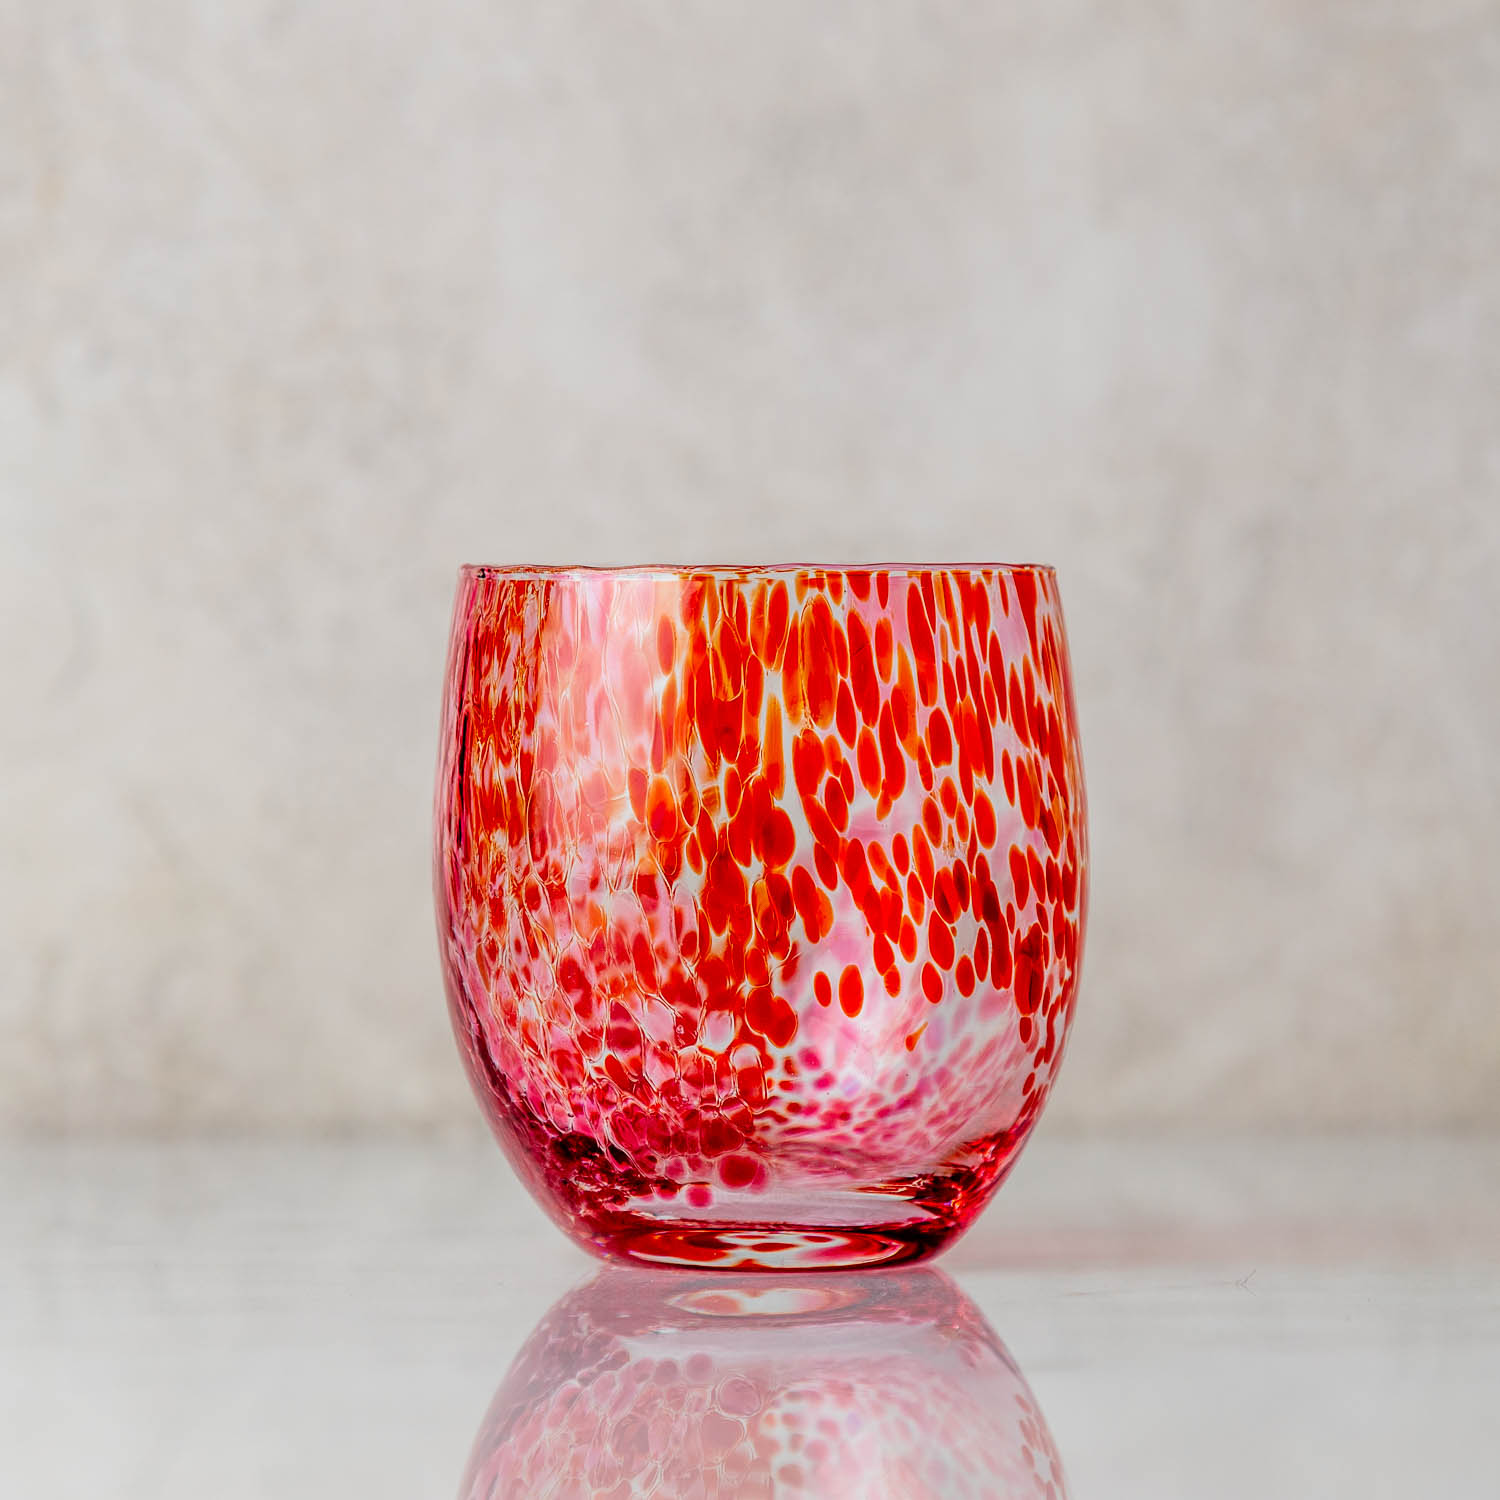 Dorset Stemless Red Wine Glasses